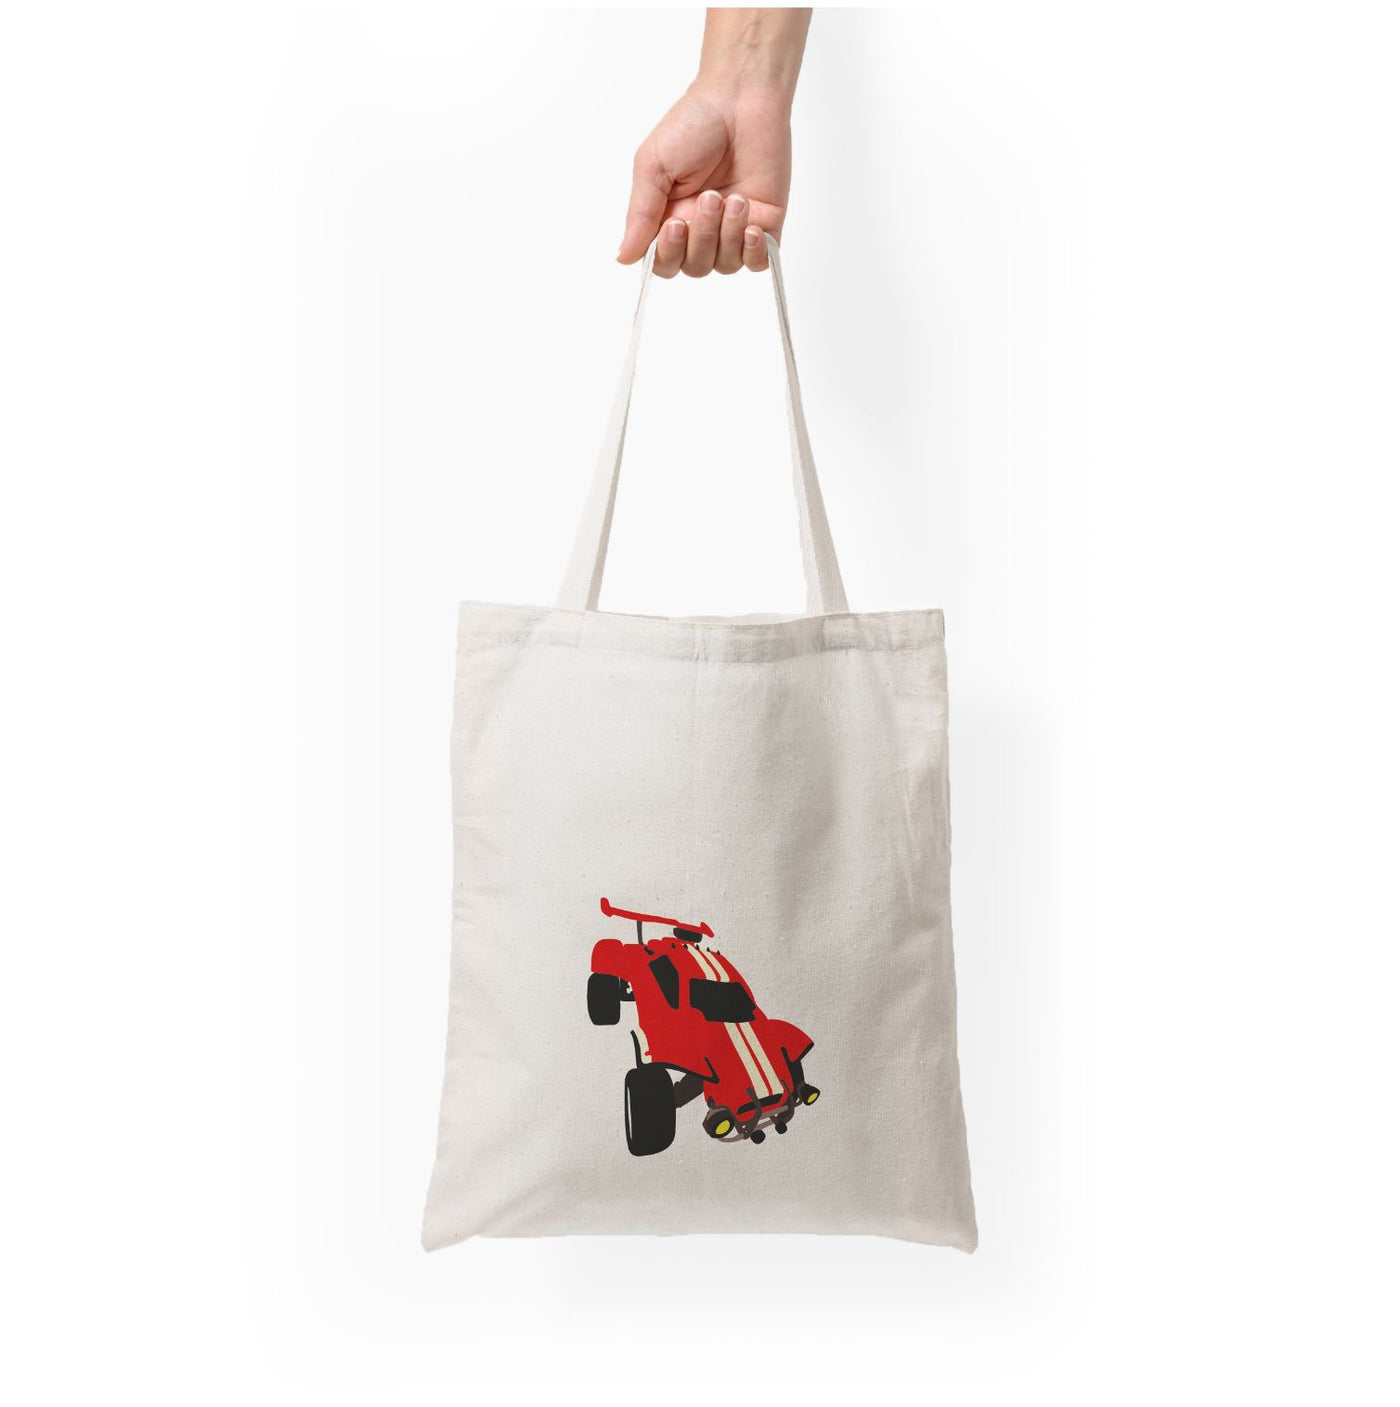 Red Octane - Rocket League Tote Bag